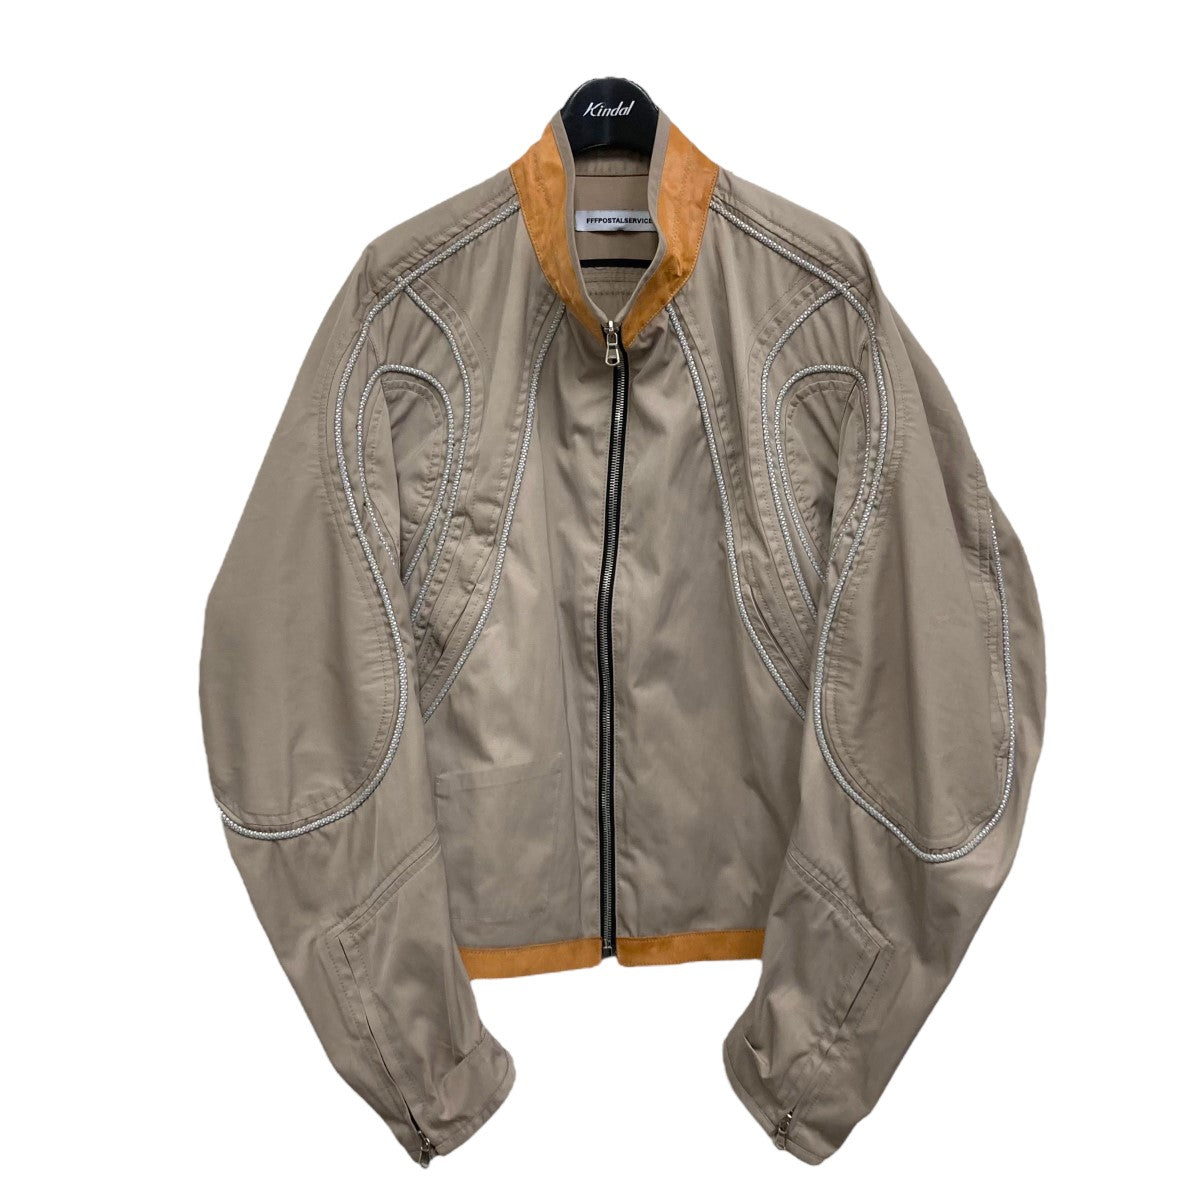 FFFPOSTALSERVICE Leather Zipper Jacket使用回数は2回程度です ...